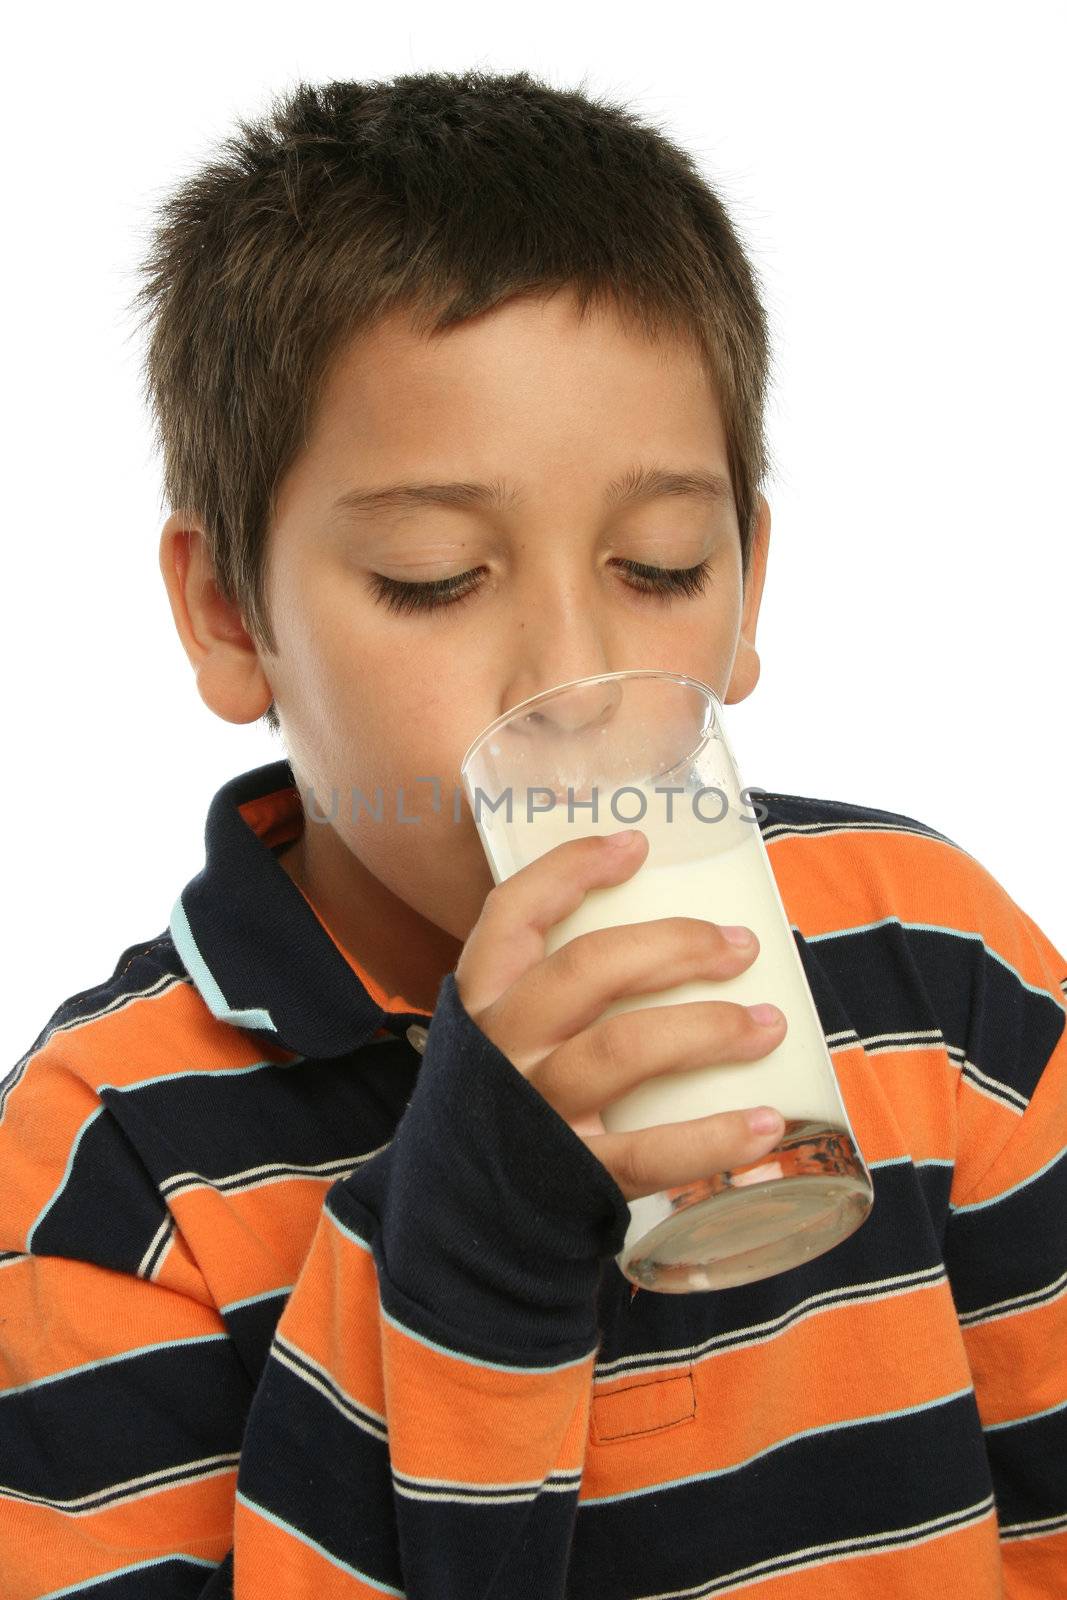 Boy drinking a glass of milk by Erdosain